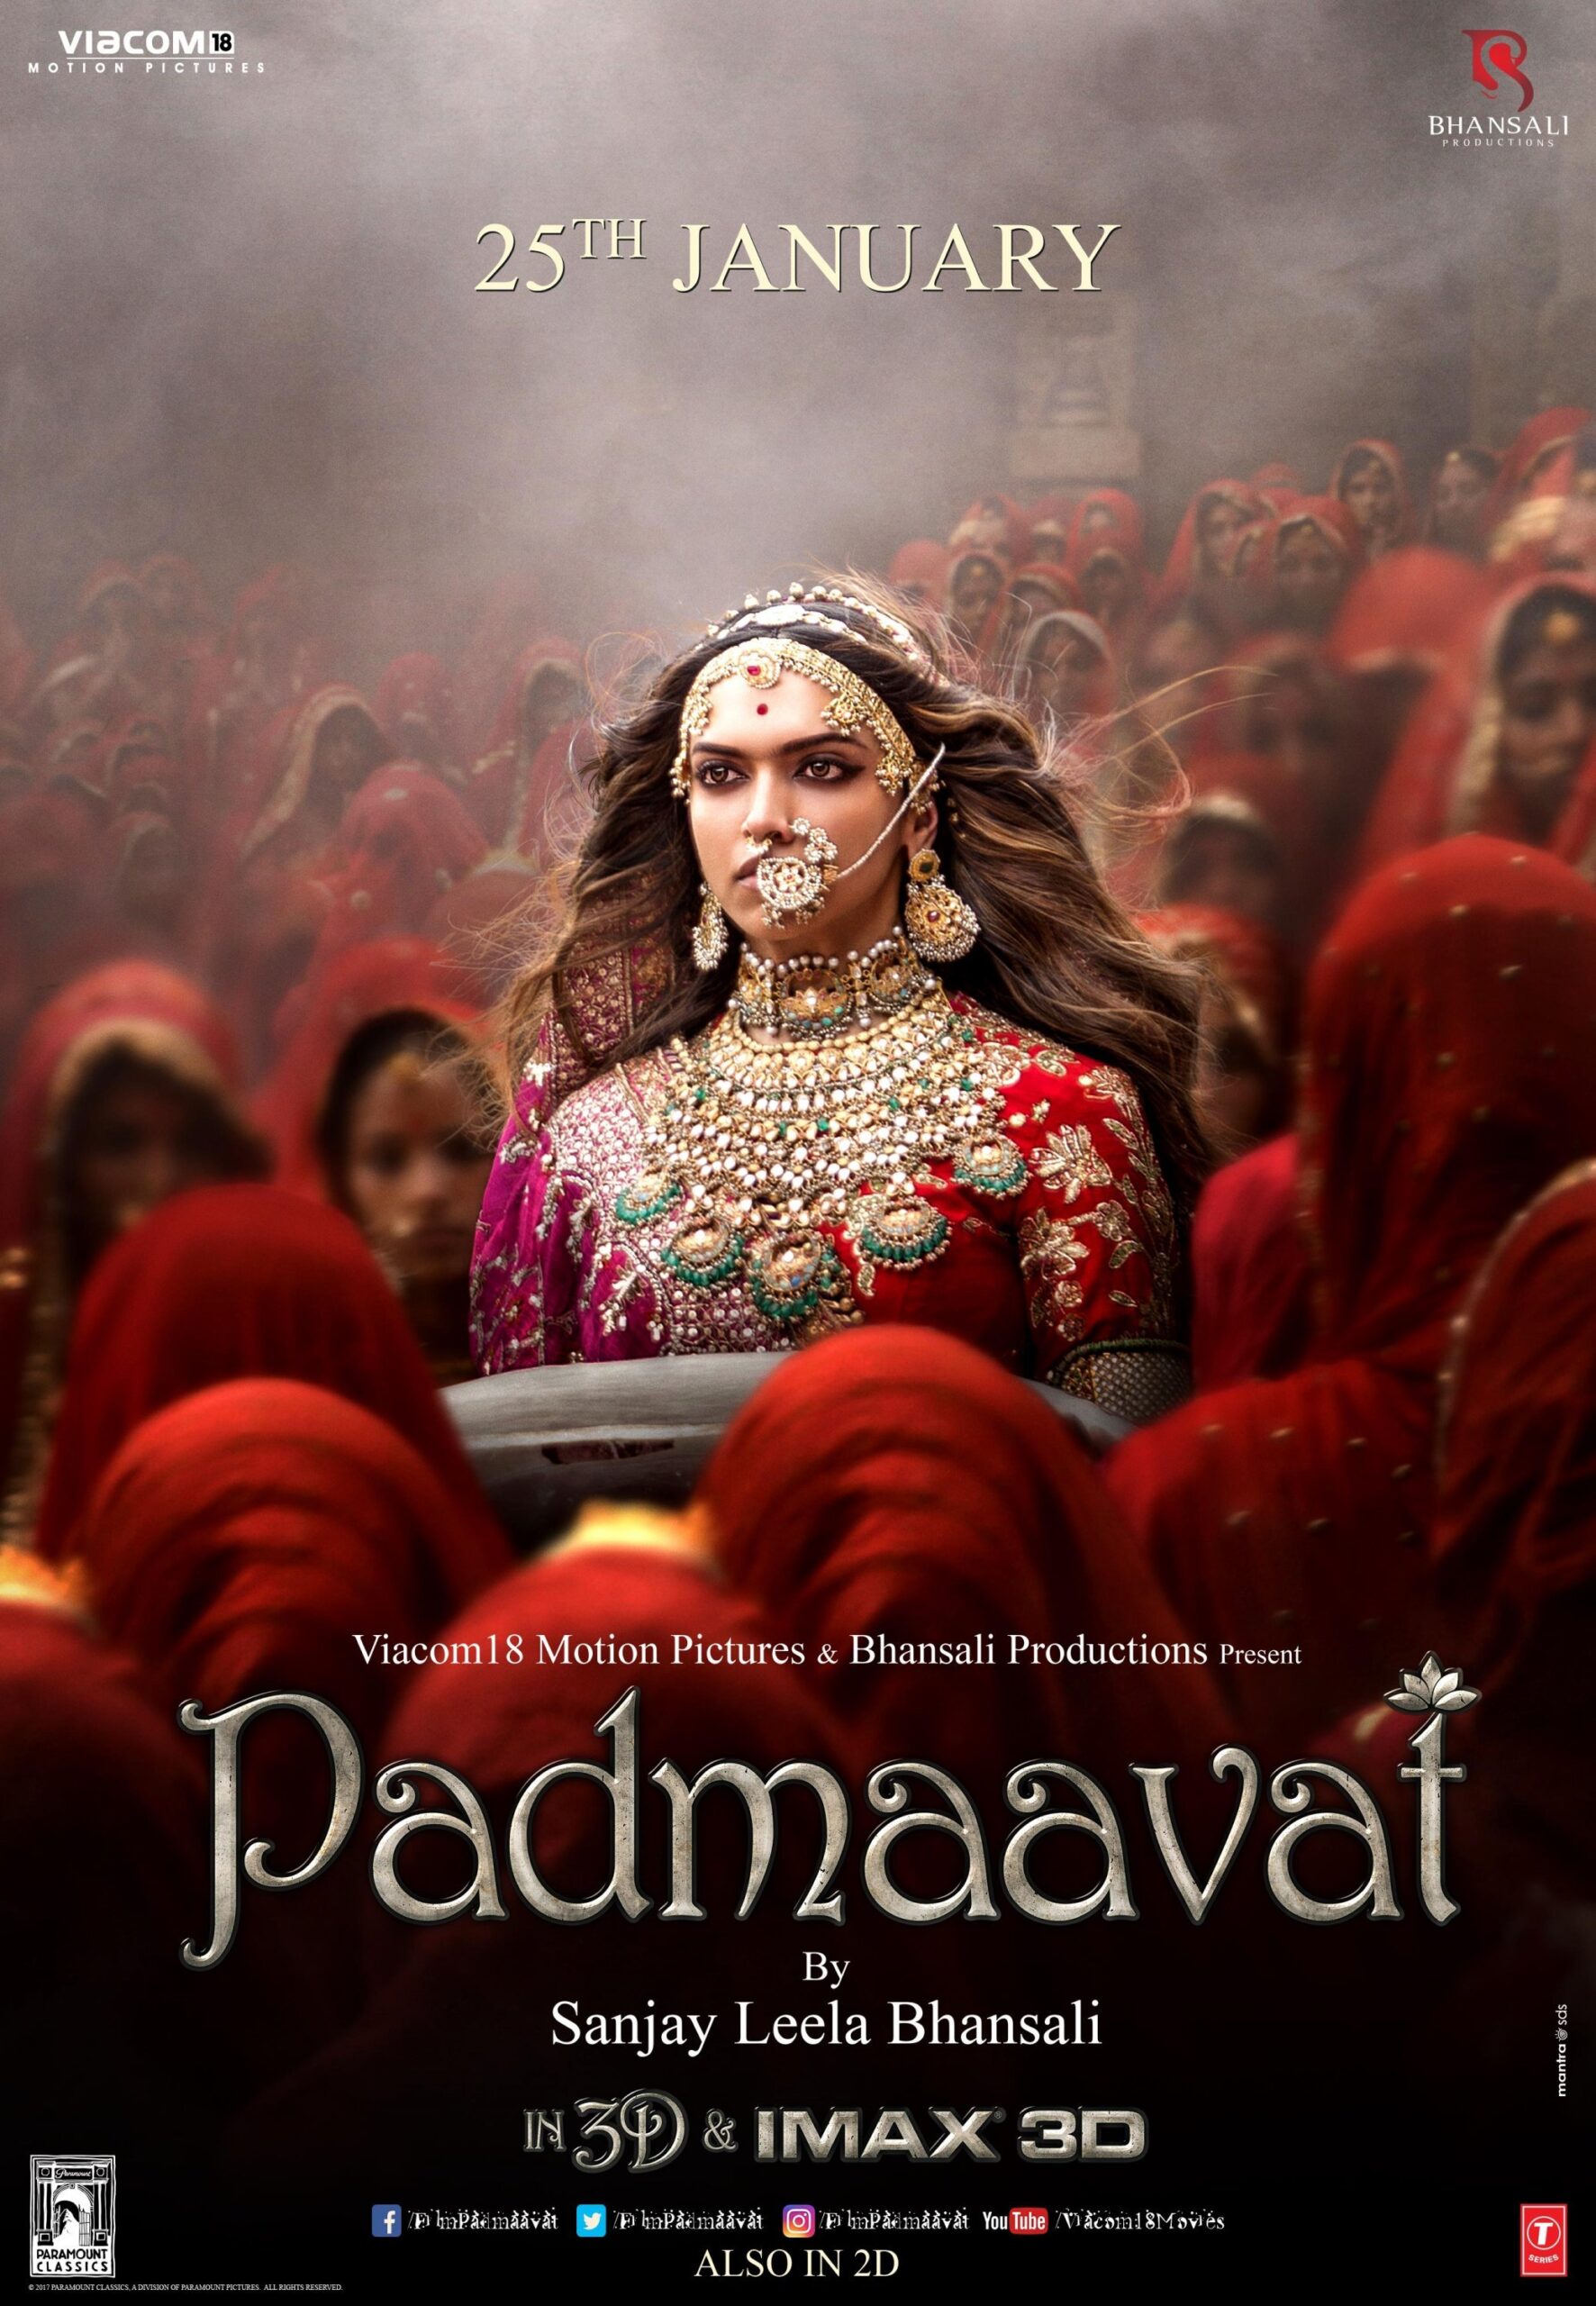 Padmaavat Movie Review - The Celeb Guru